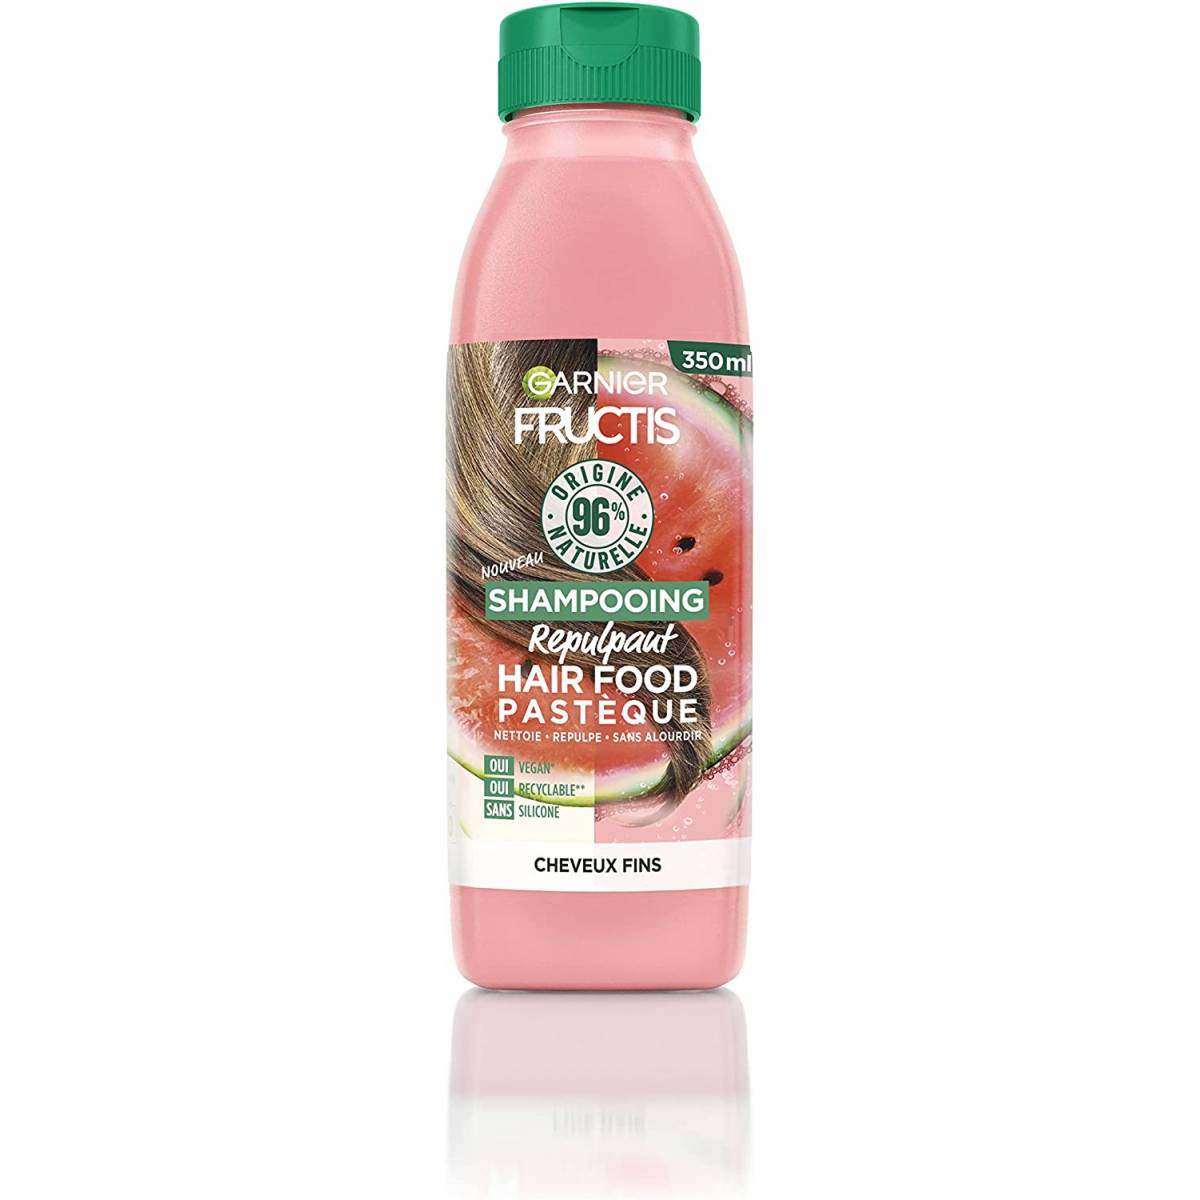 Plumping Fructis MaxxiDiscount - Garnier 350ml Hair Food Watermelon Shampoo